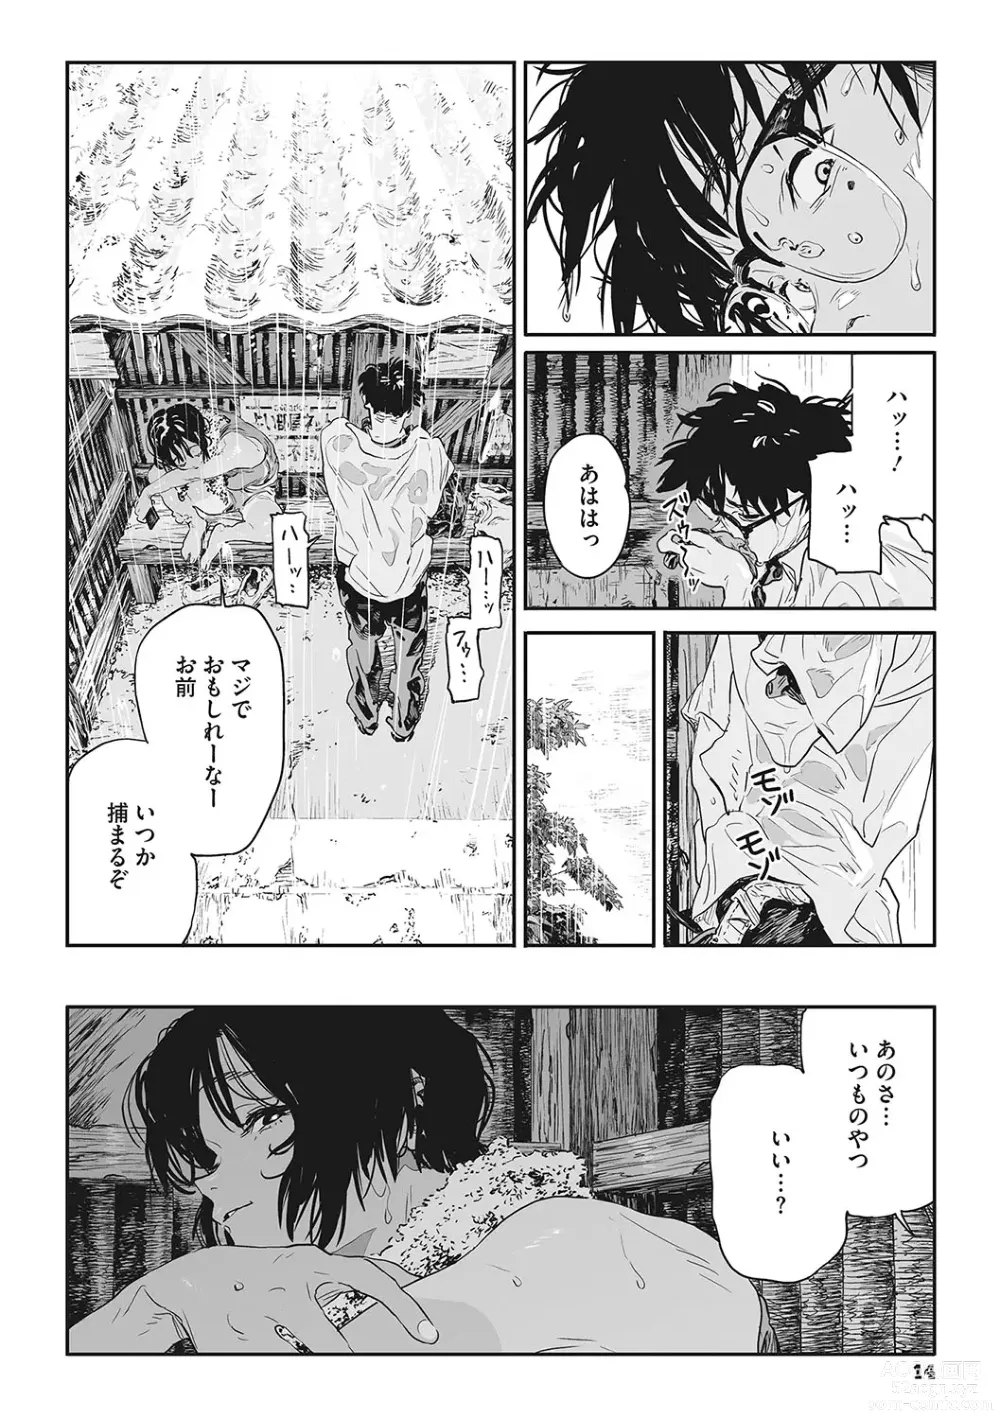 Page 13 of manga Ito o Yoru